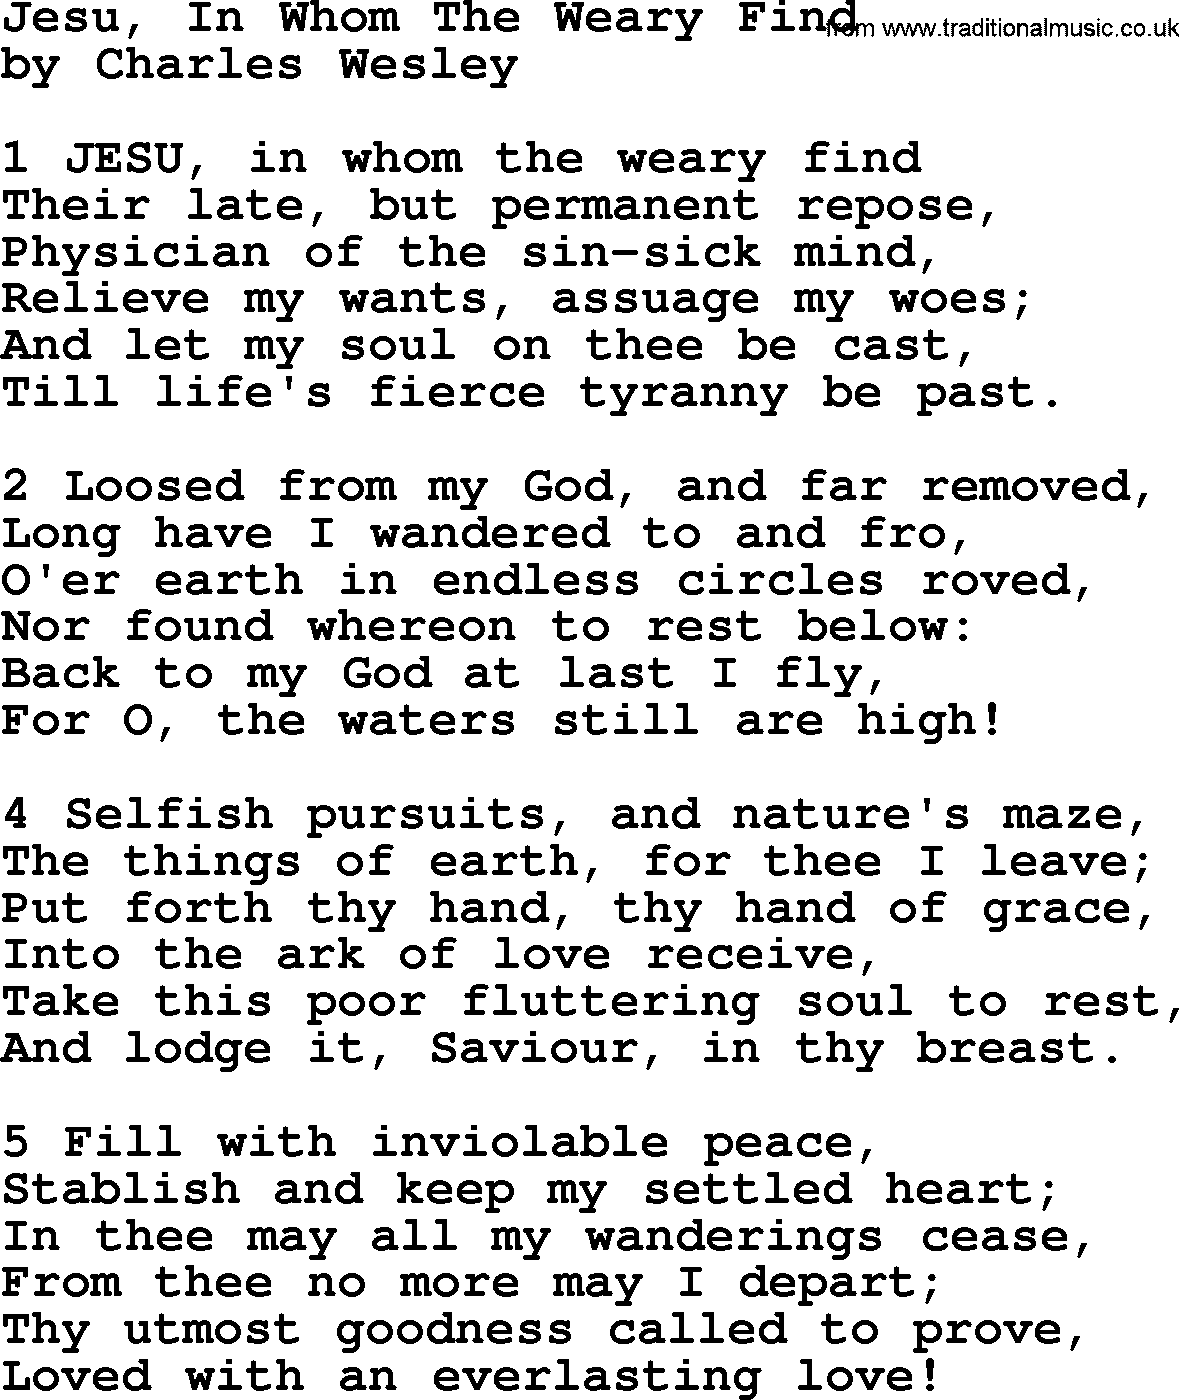 Charles Wesley hymn: Jesu, In Whom The Weary Find, lyrics